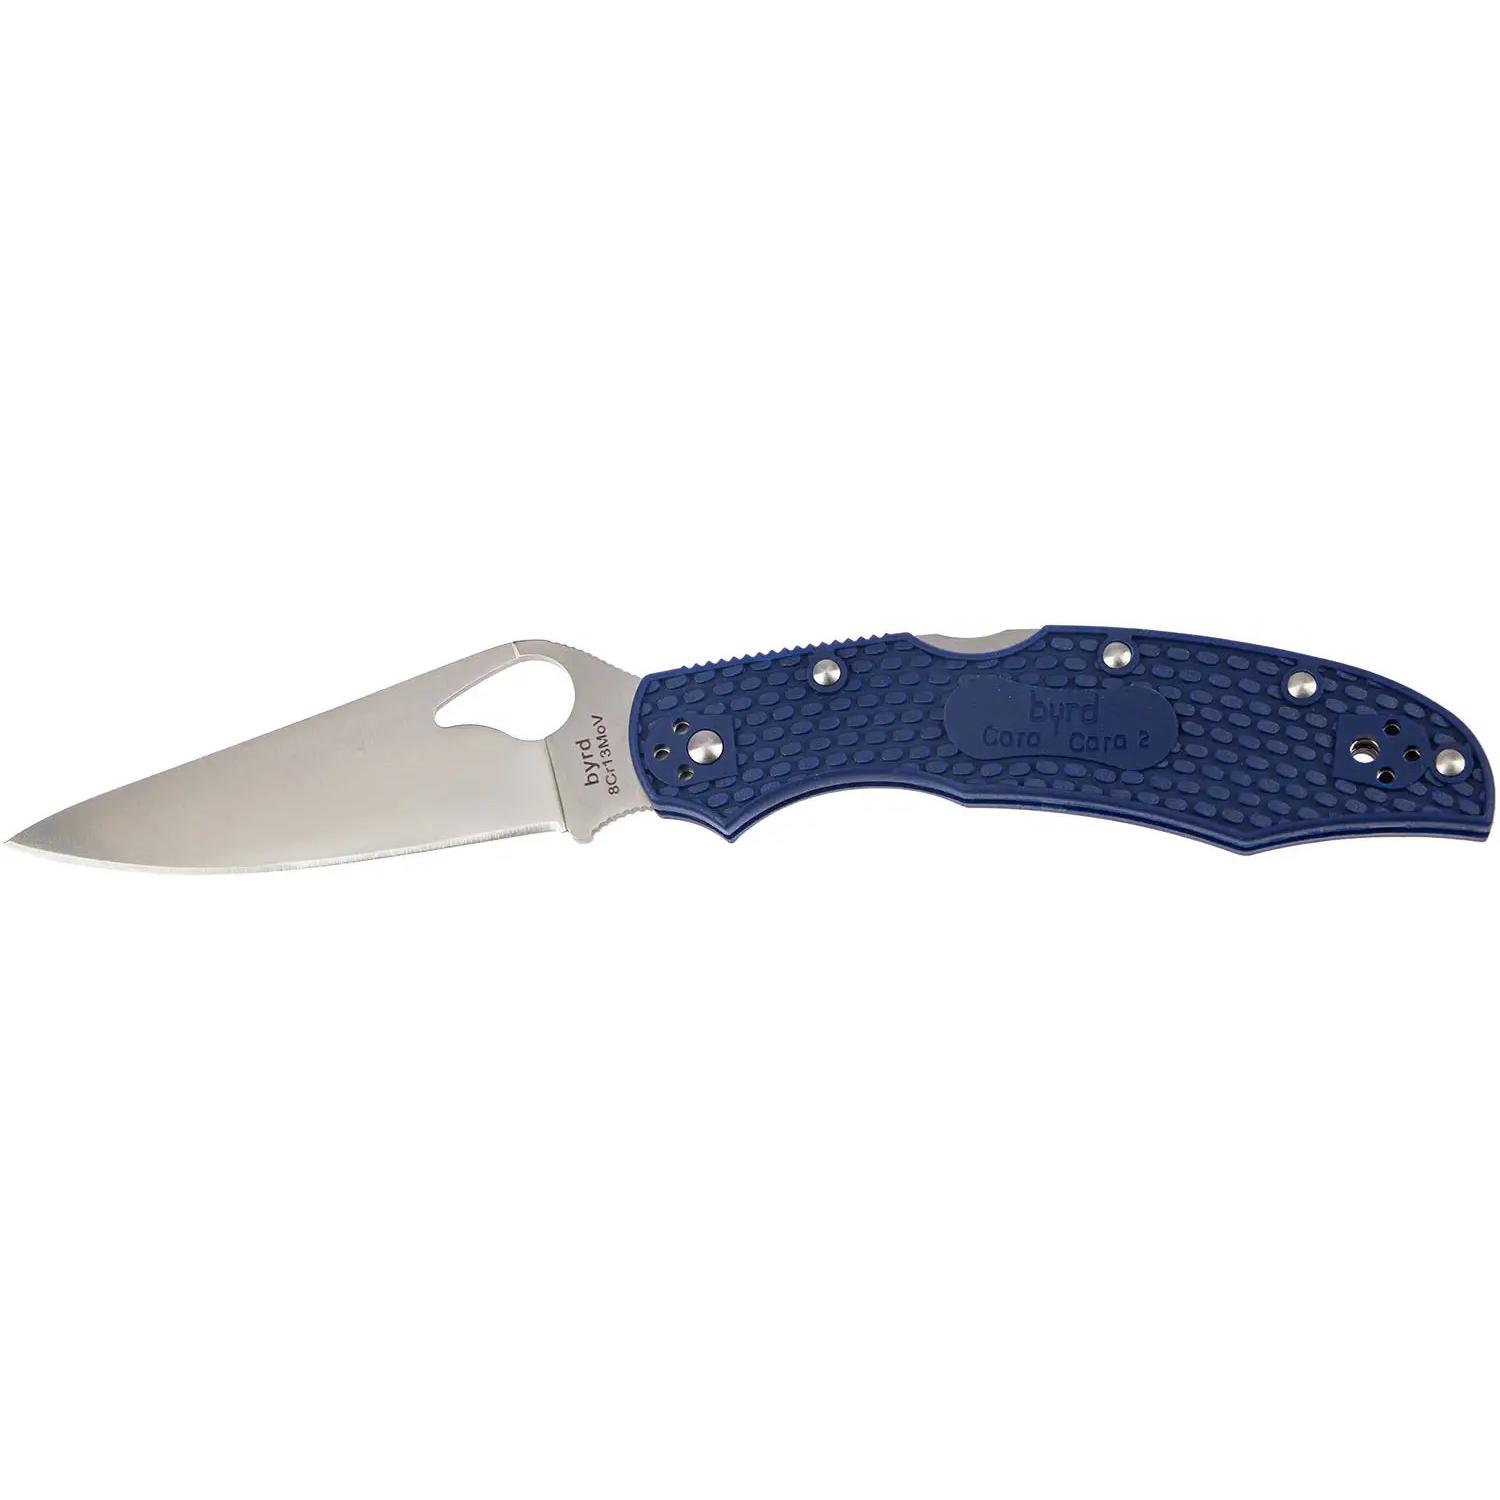 Нож Spyderco Byrd Cara Cara 2 Синий BY03PBL2 87.13.45